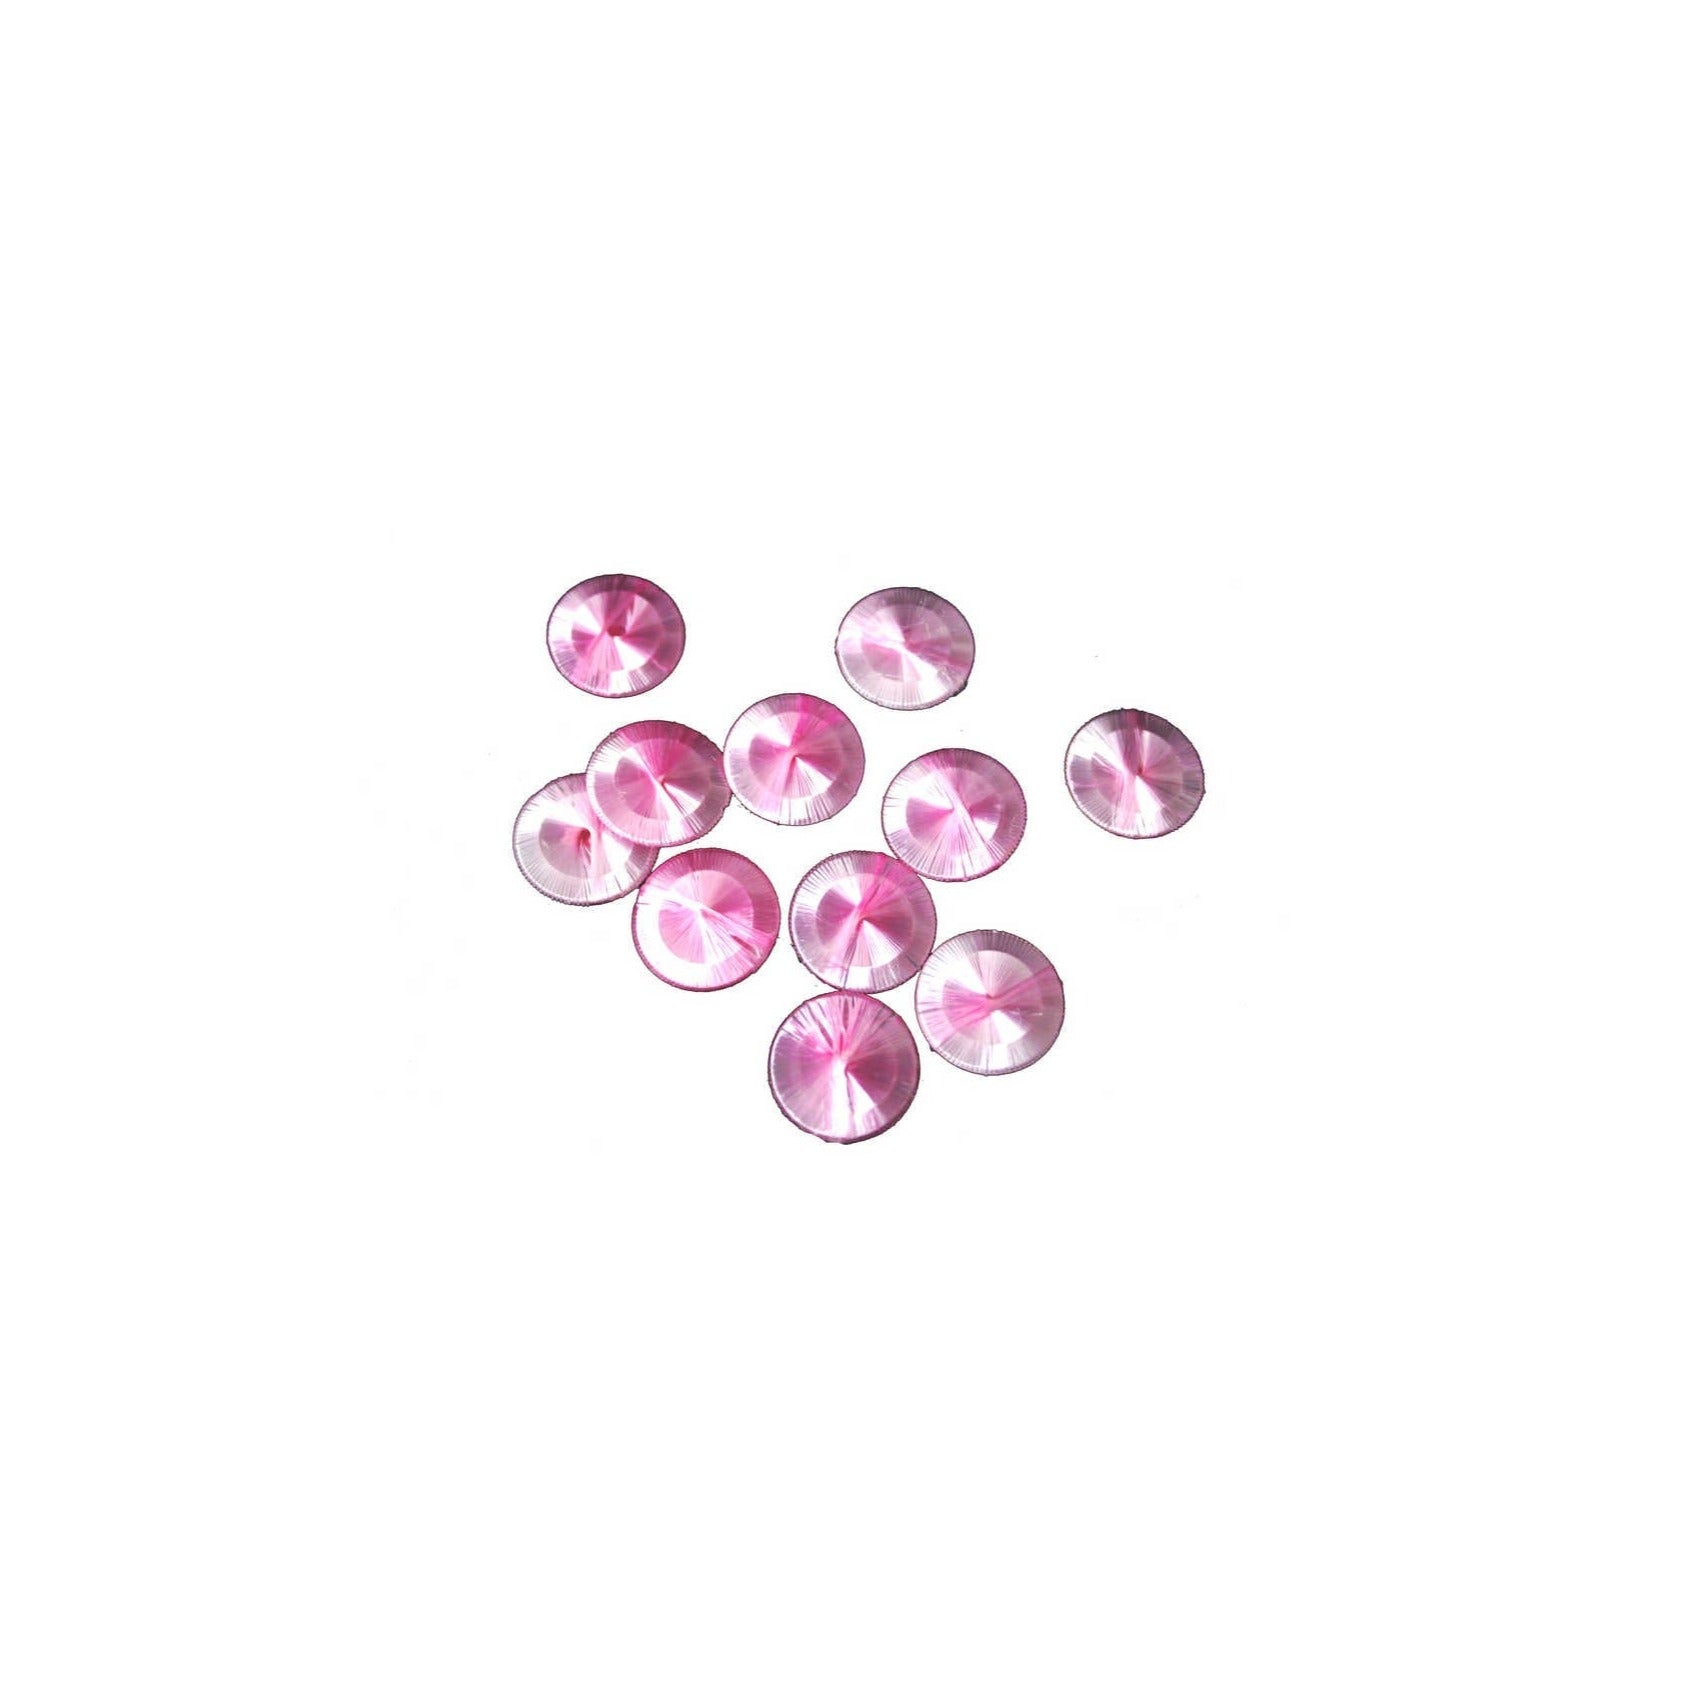 Indian Petals Lightweight Threaded Button Motif for Designing, Craft or Decoration - 489, Light Pink